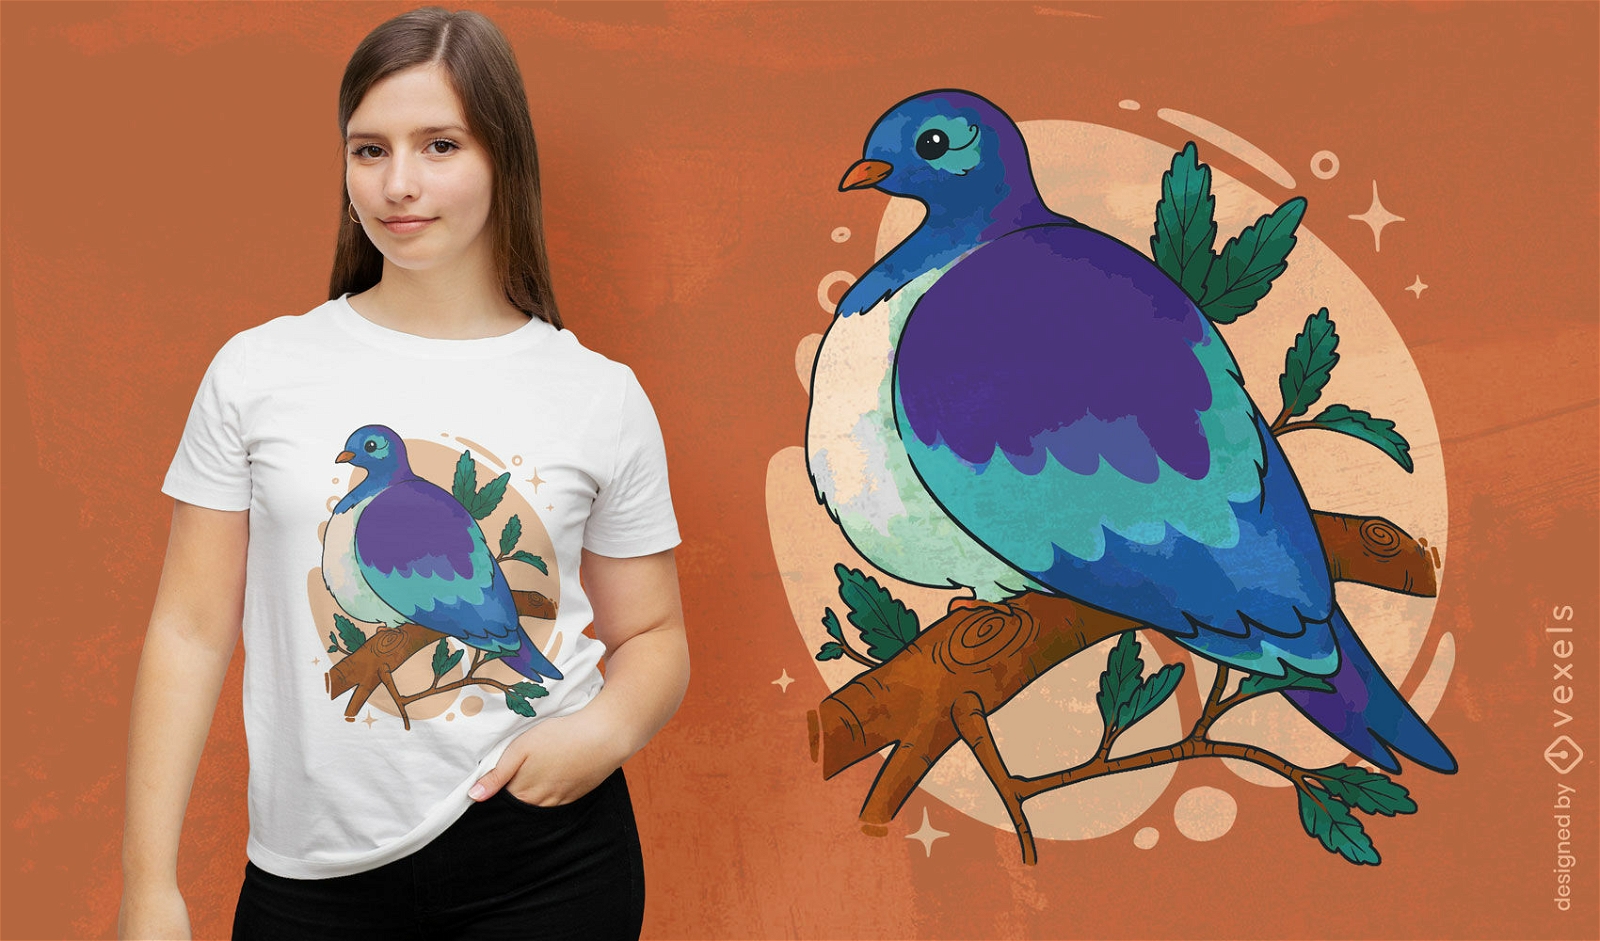 Blue bird in tree branch t-shirt design